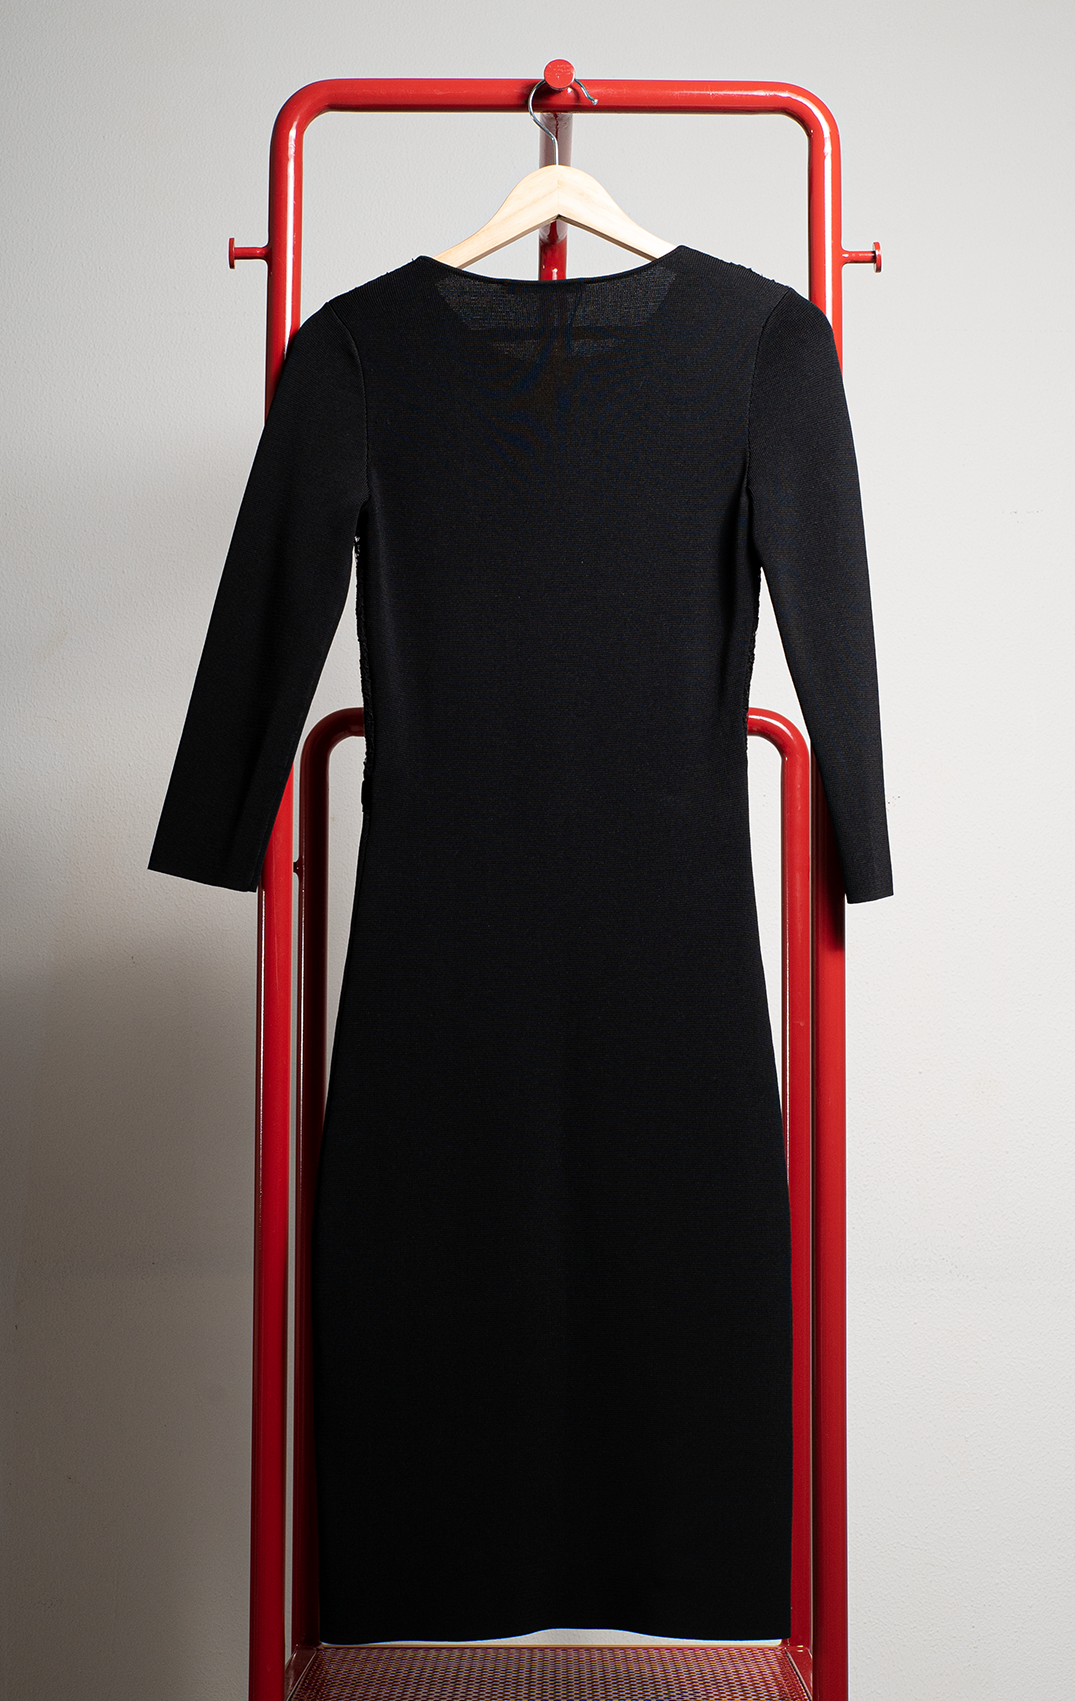 CAROLINA HERRERA DRESS - Black lace & crepe with velevt belt - XSmall